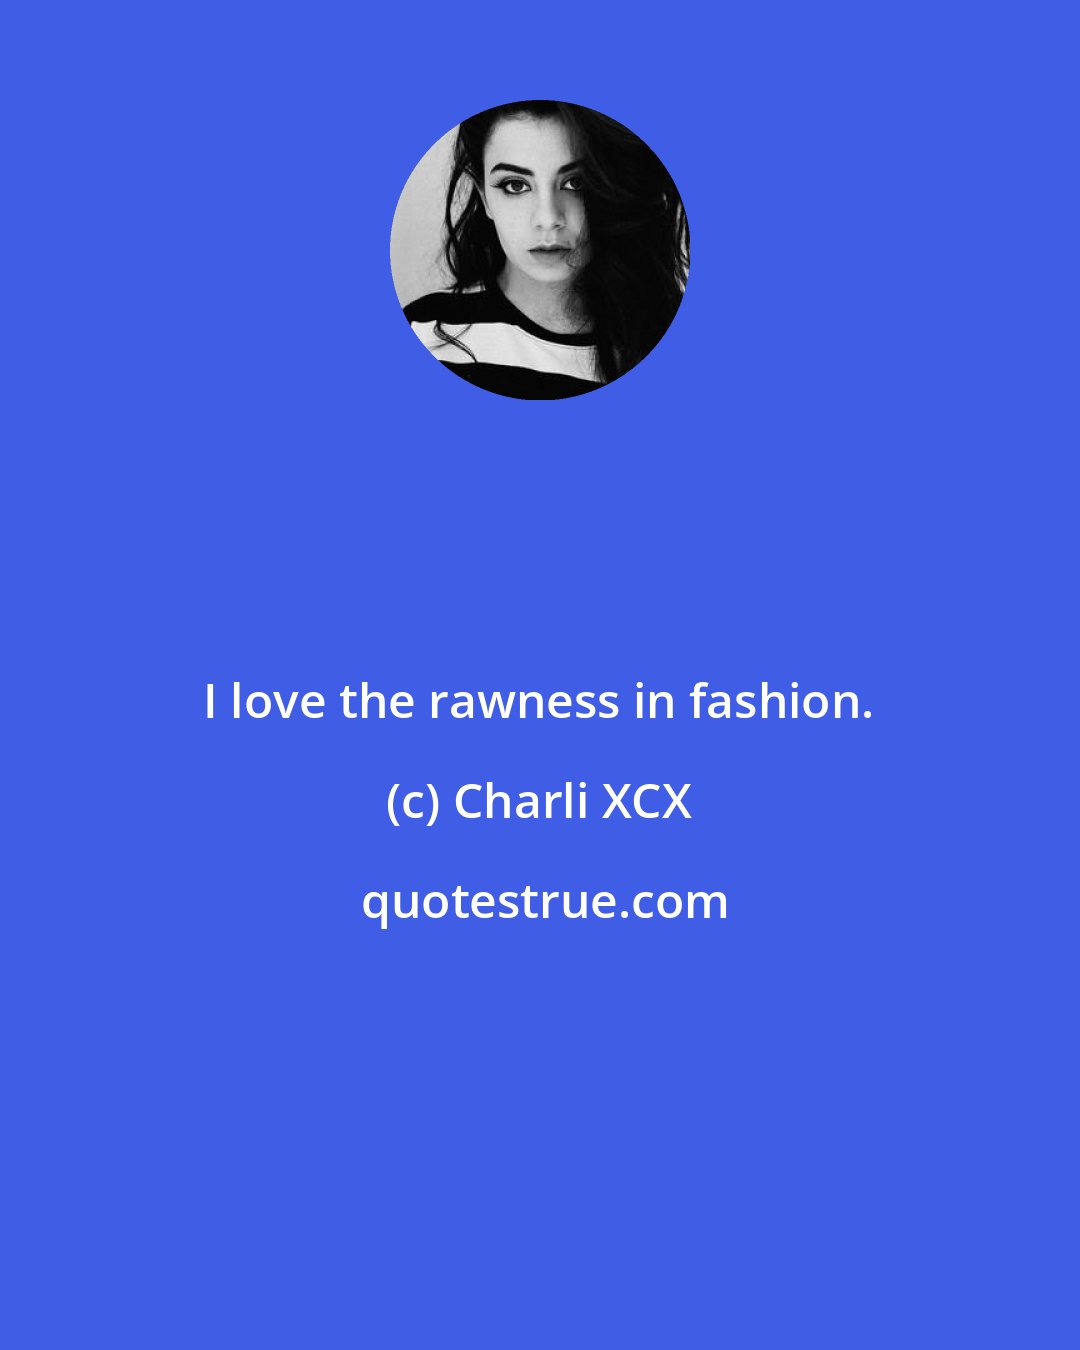 Charli XCX: I love the rawness in fashion.